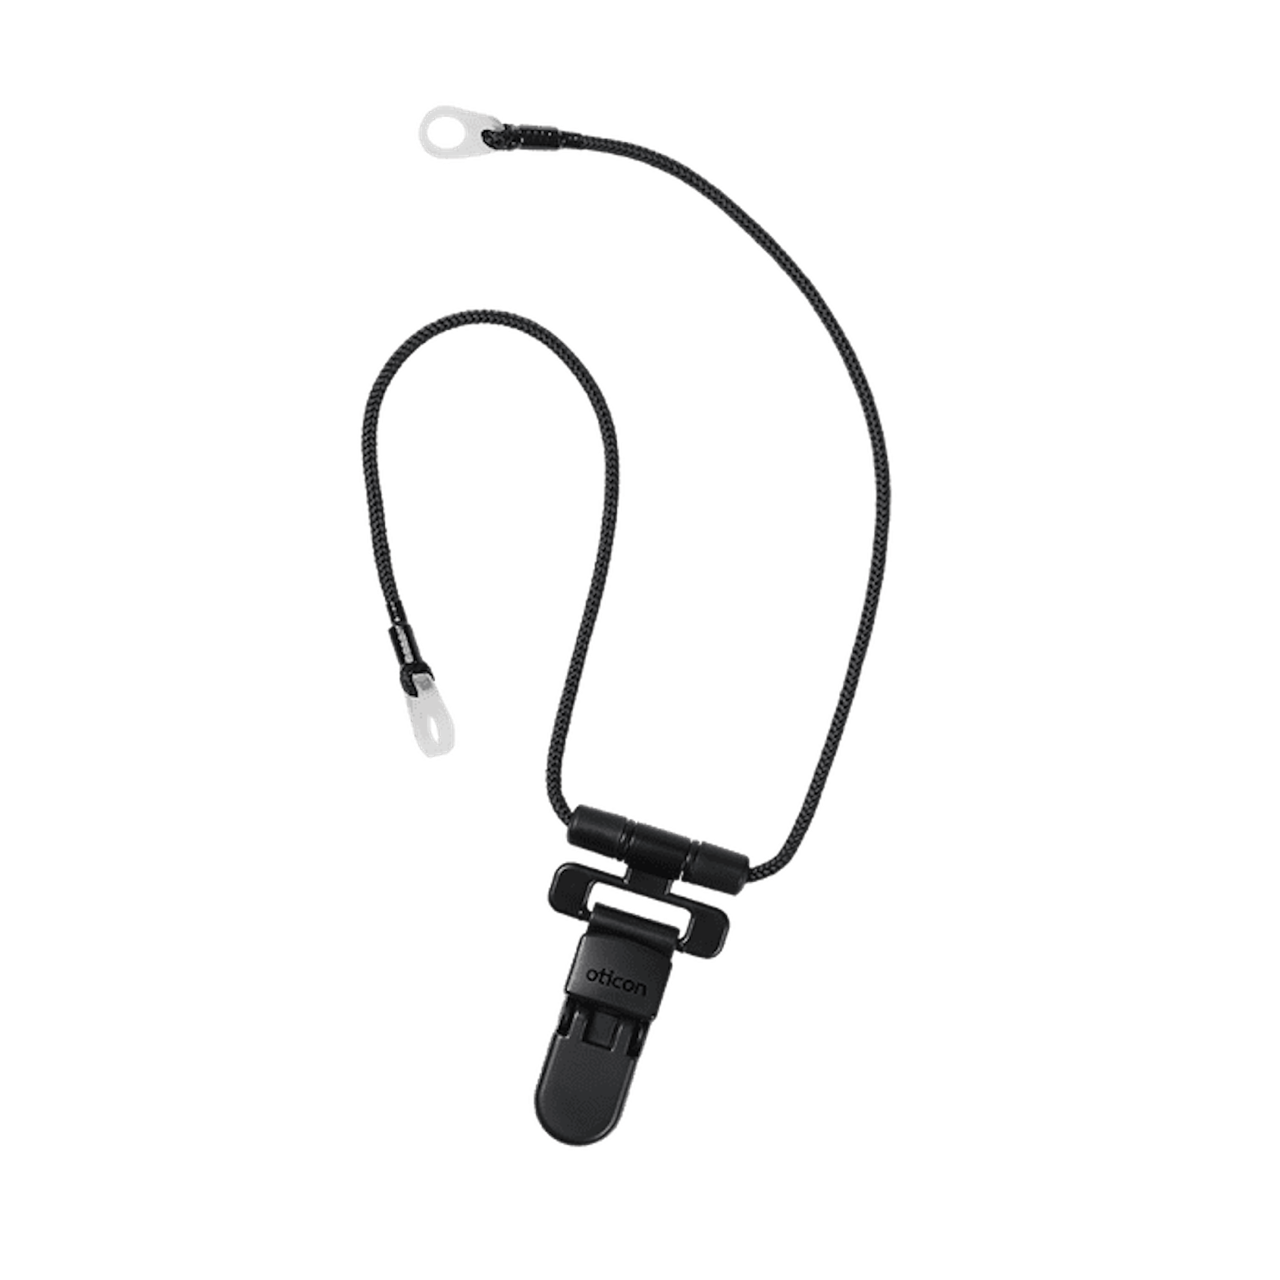 Oticon SafeLine - Halteband für Hörgeräte